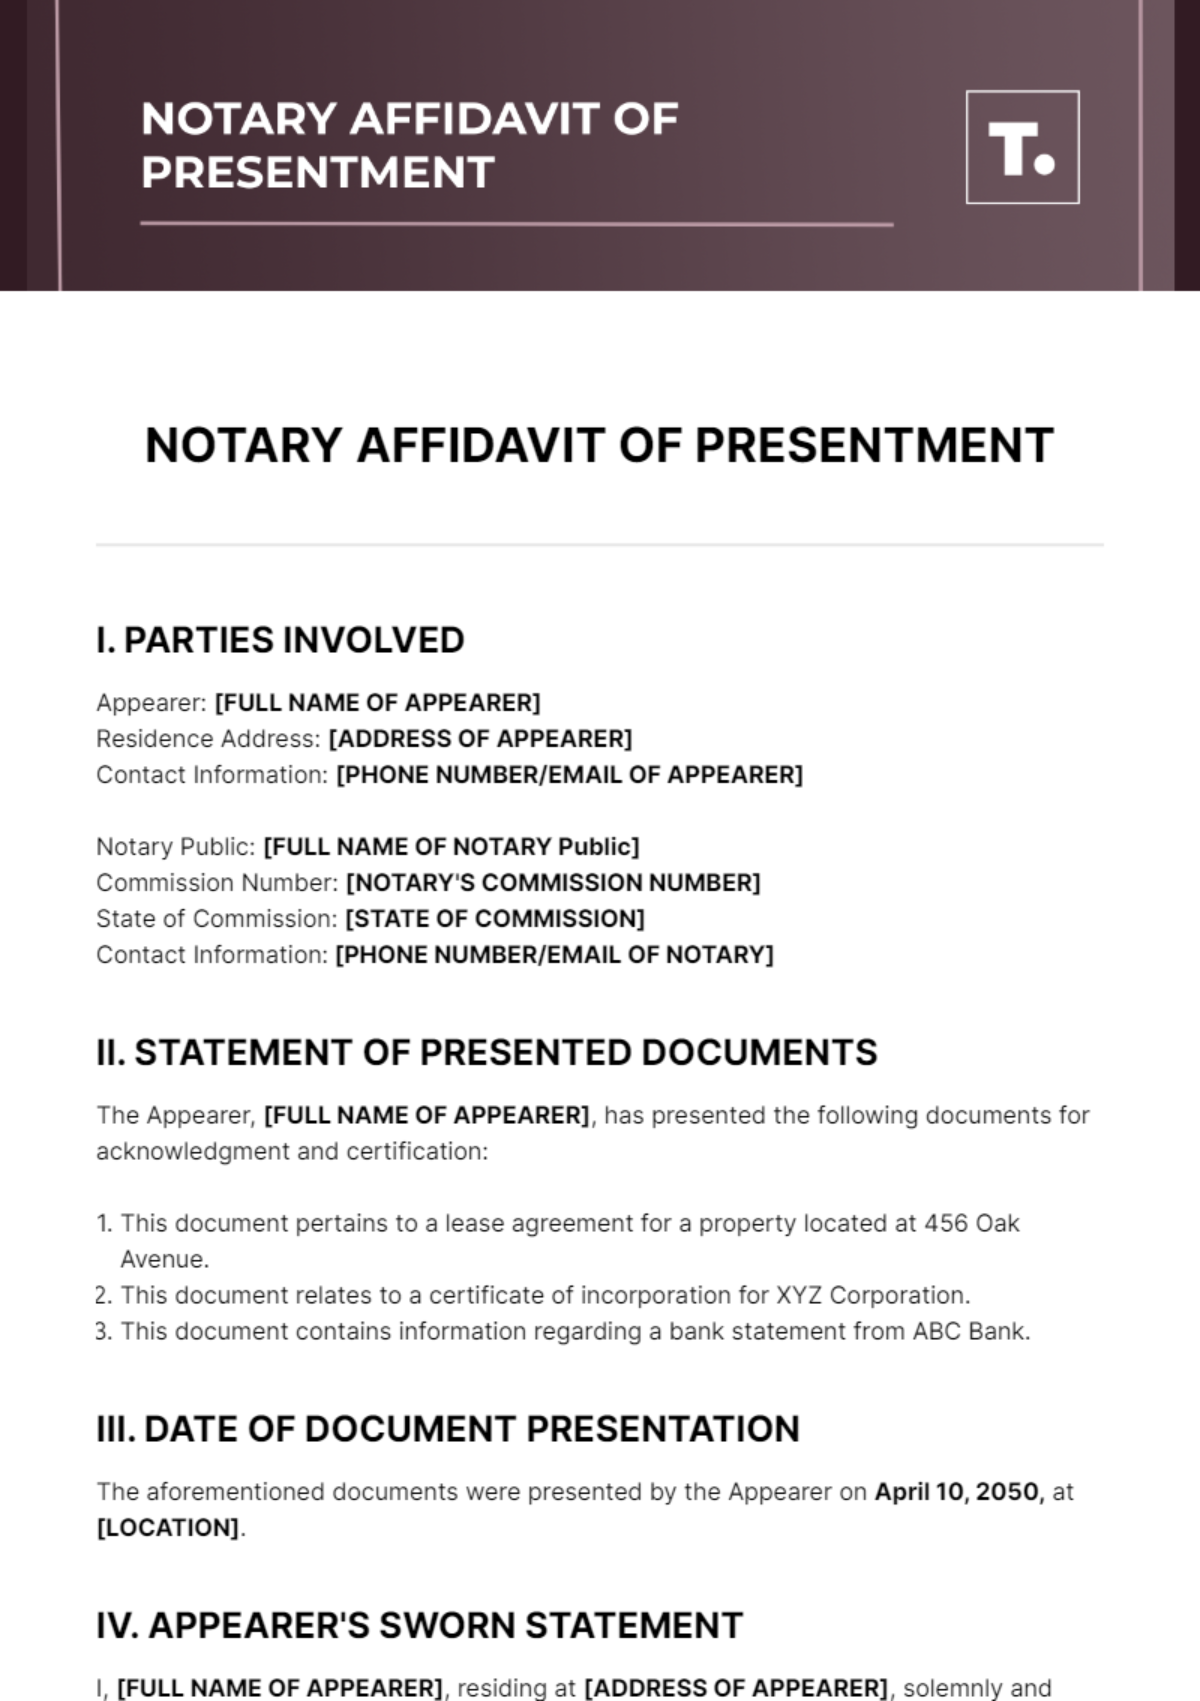 Free Notary Affidavit of Presentment Template